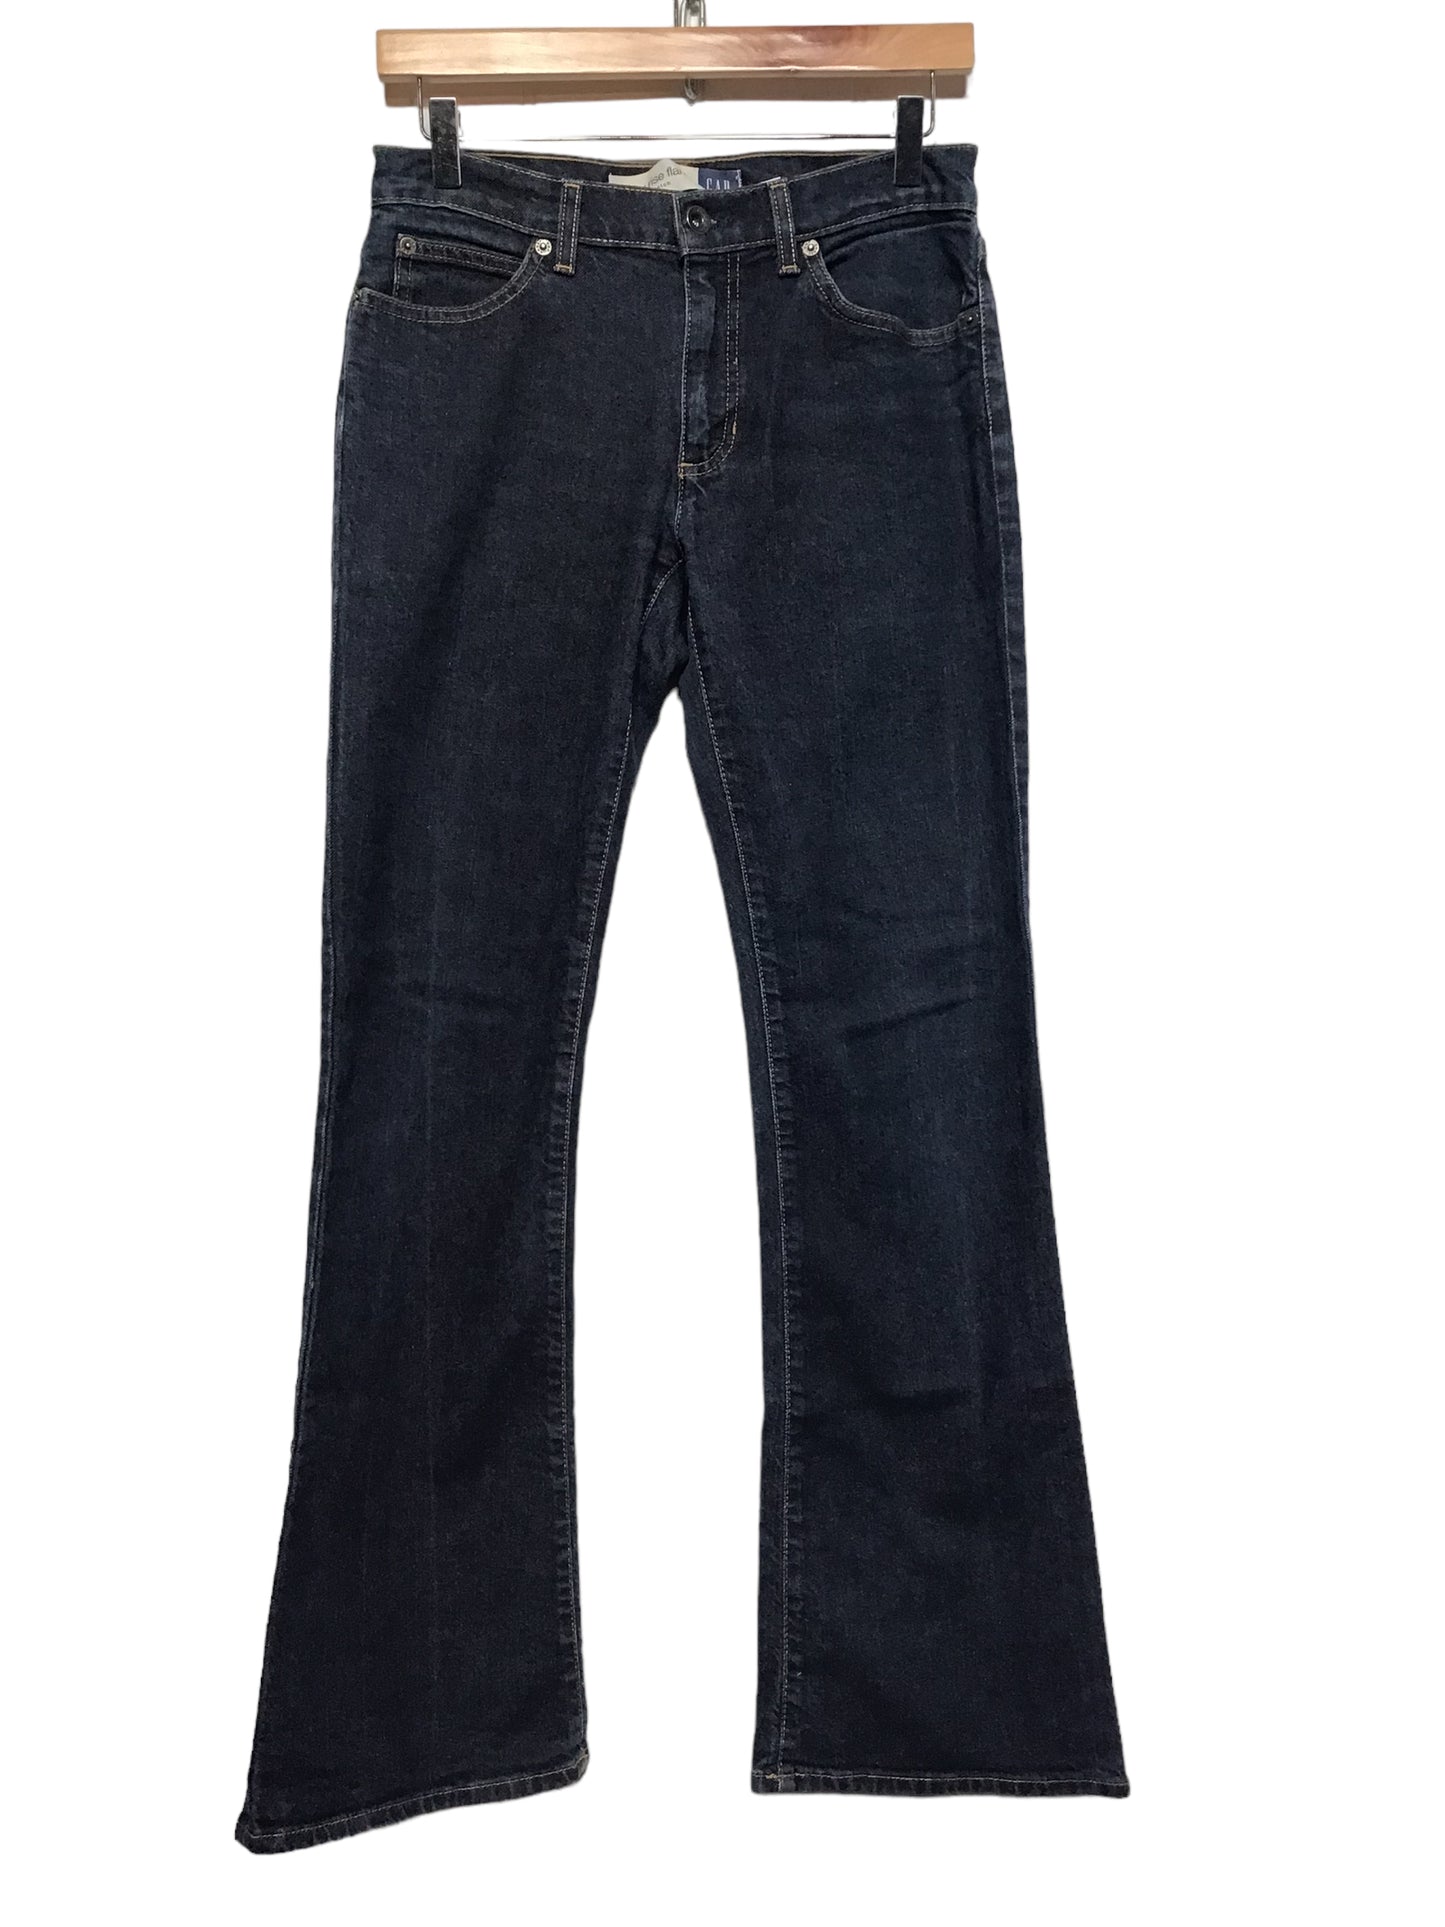 Gap Jeans (30x33)